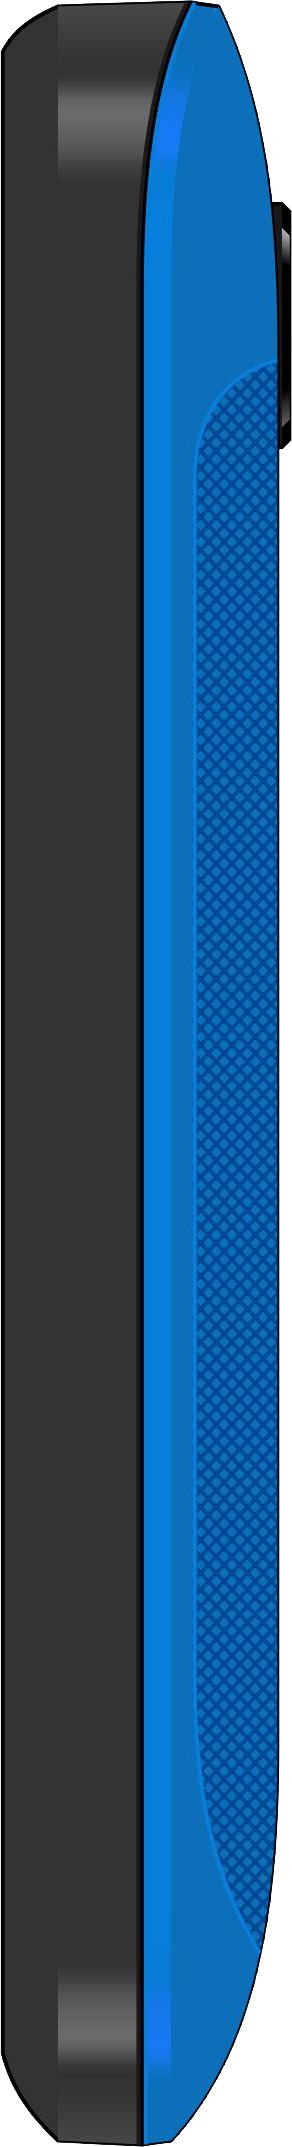 Maxcom Classic Mobile Phone MM135 1.77" Dual SIM 2G Black/Blue